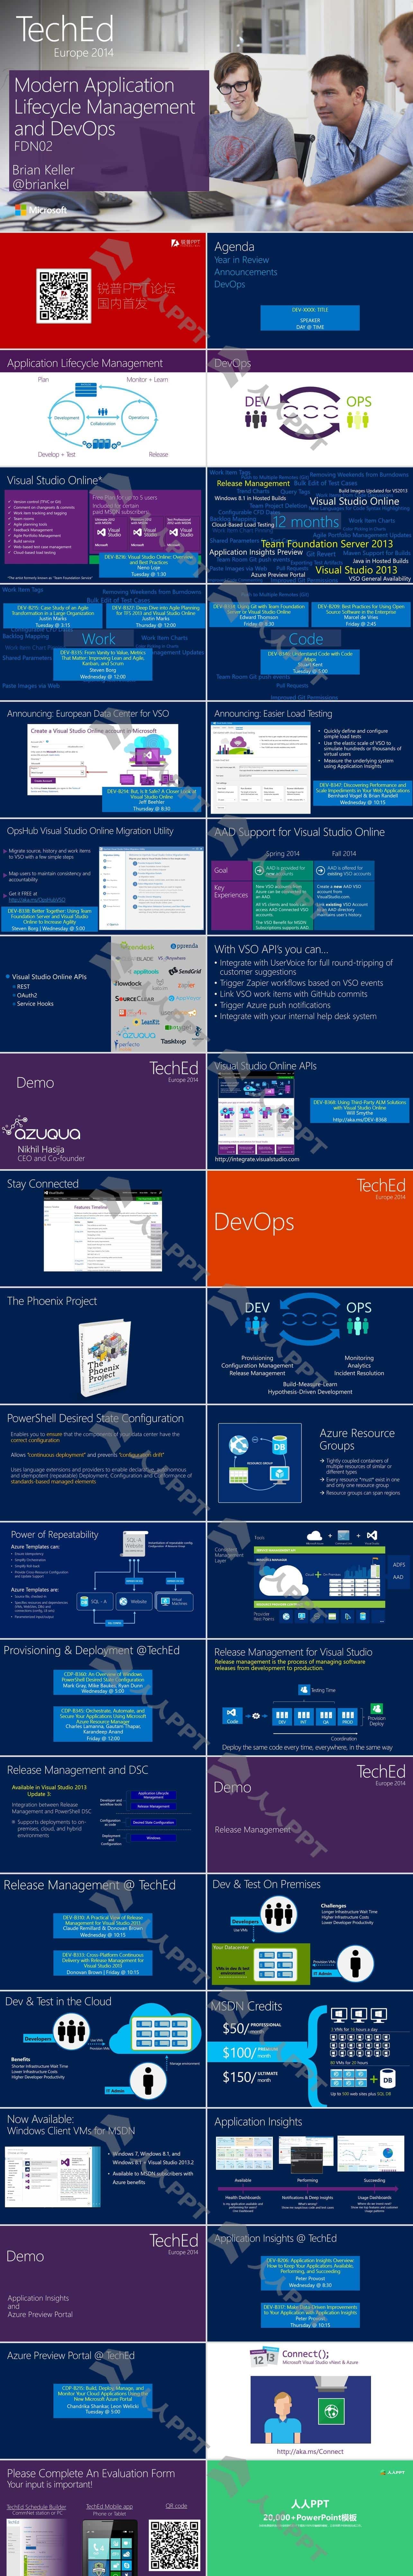 Microsoft TechEd 2014最新PPT模板（国内锐普首发）长图